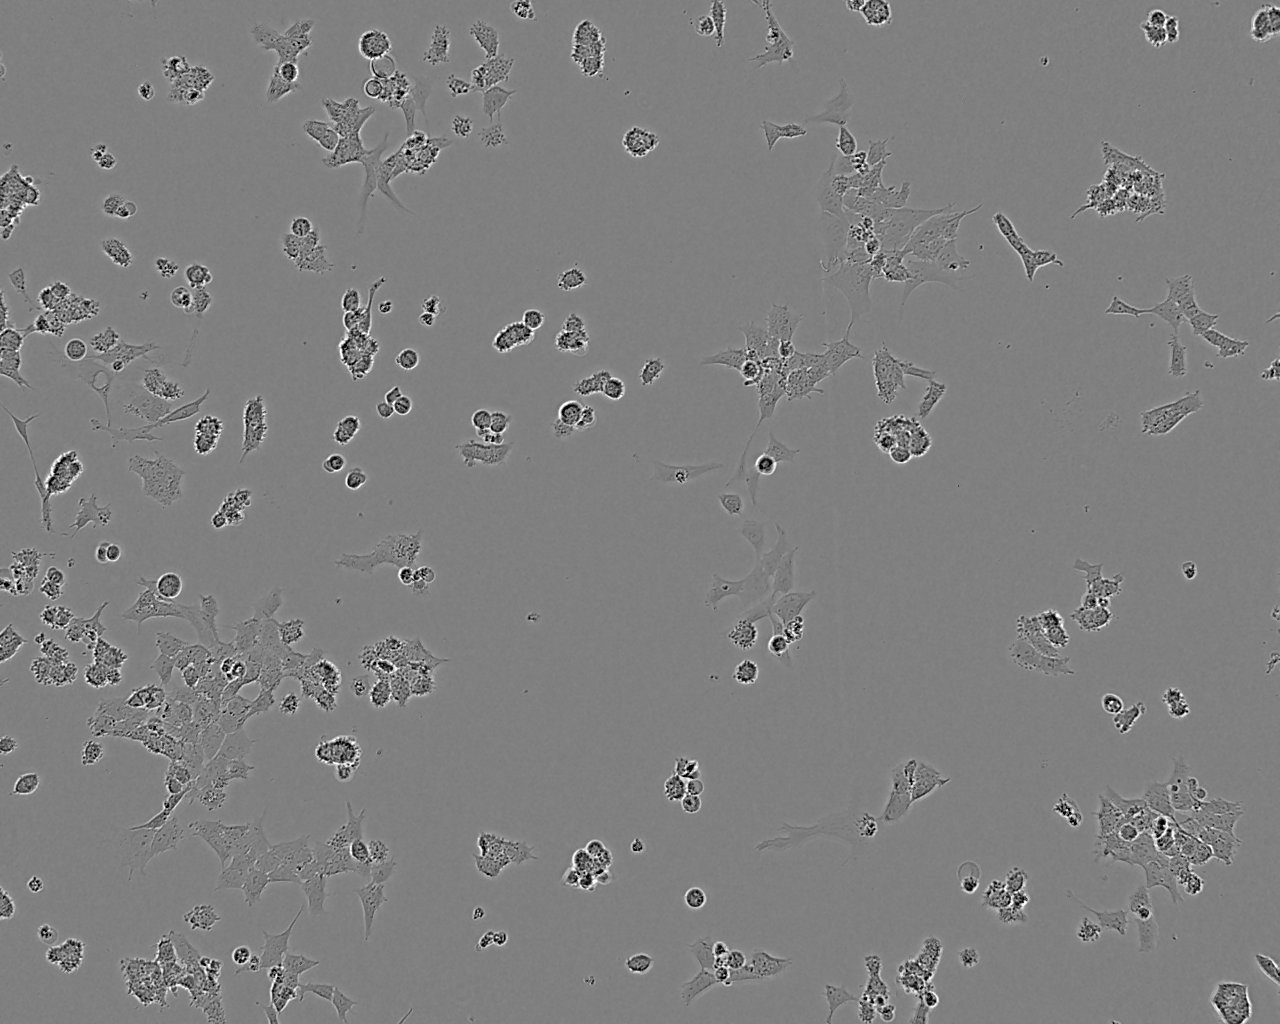 SK-N-MC细胞图片